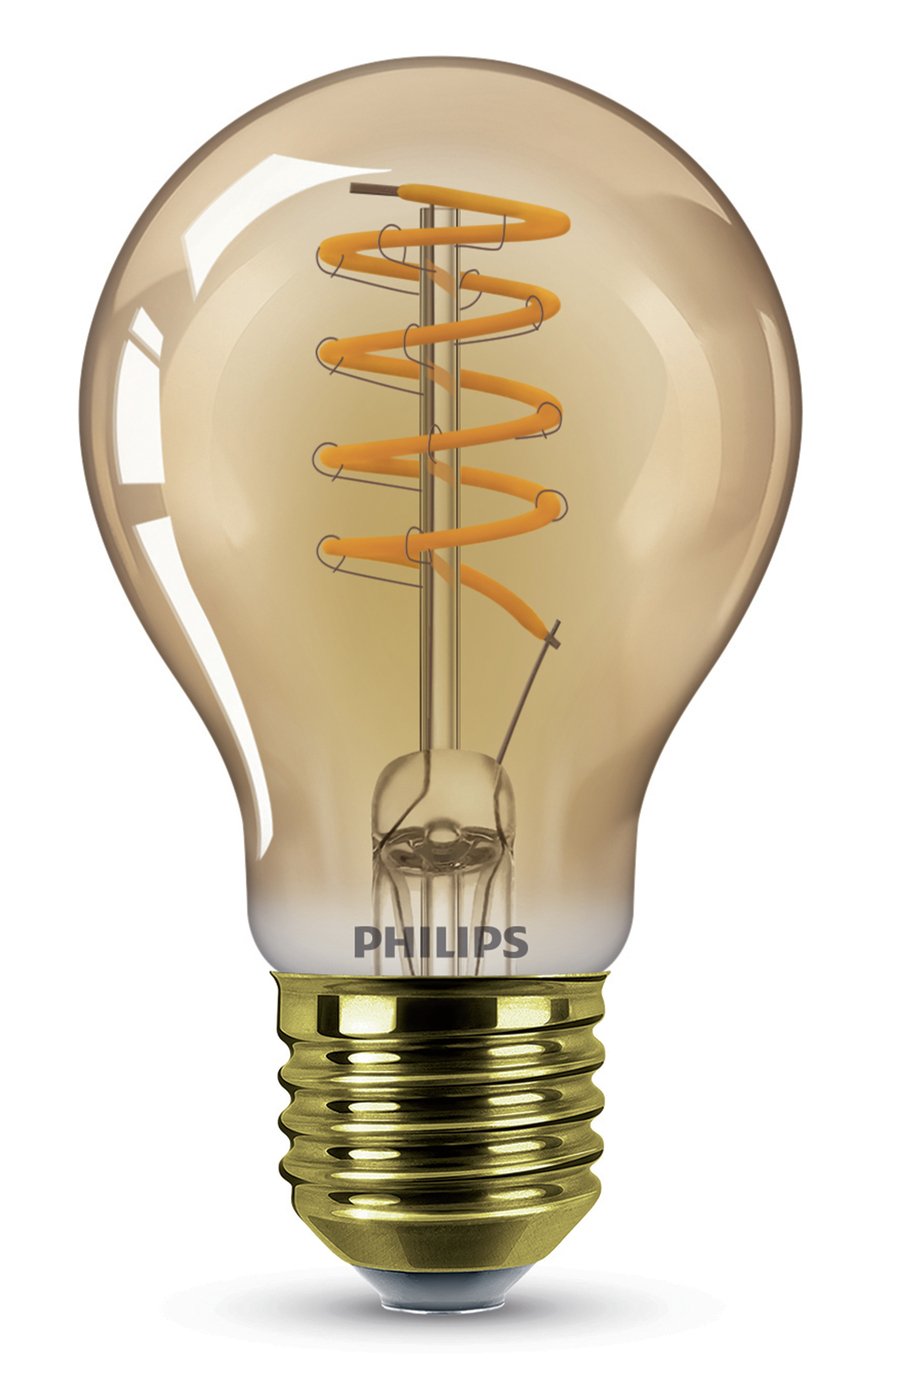 Philips LED 25W A60 E27 ES Classic Light Bulb - Gold